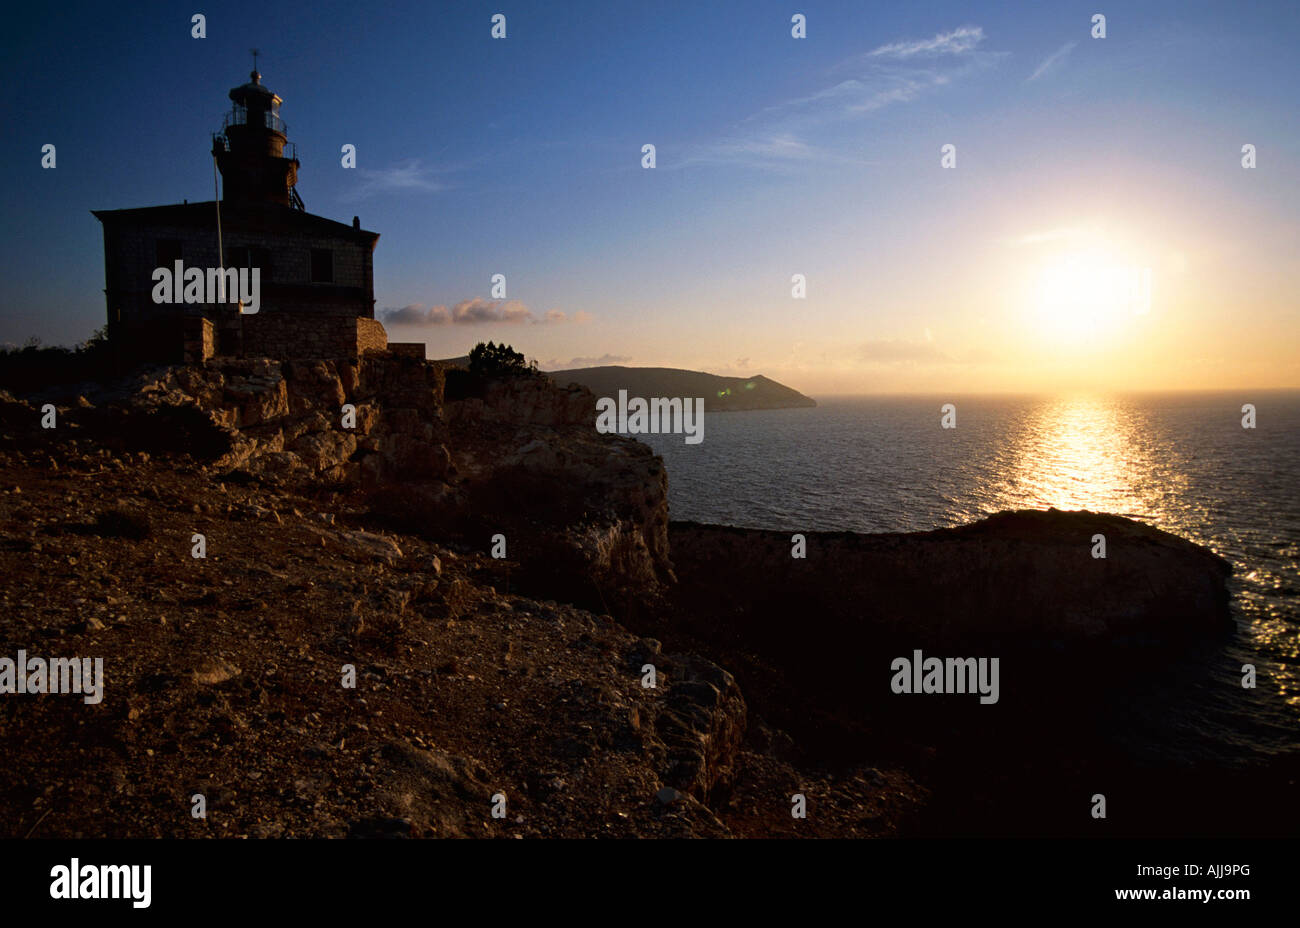 Leuchtturm auf Susac, Kroatien, am Abend | Lighthouse on Susac, Croatia, in the Backlight Stock Photo